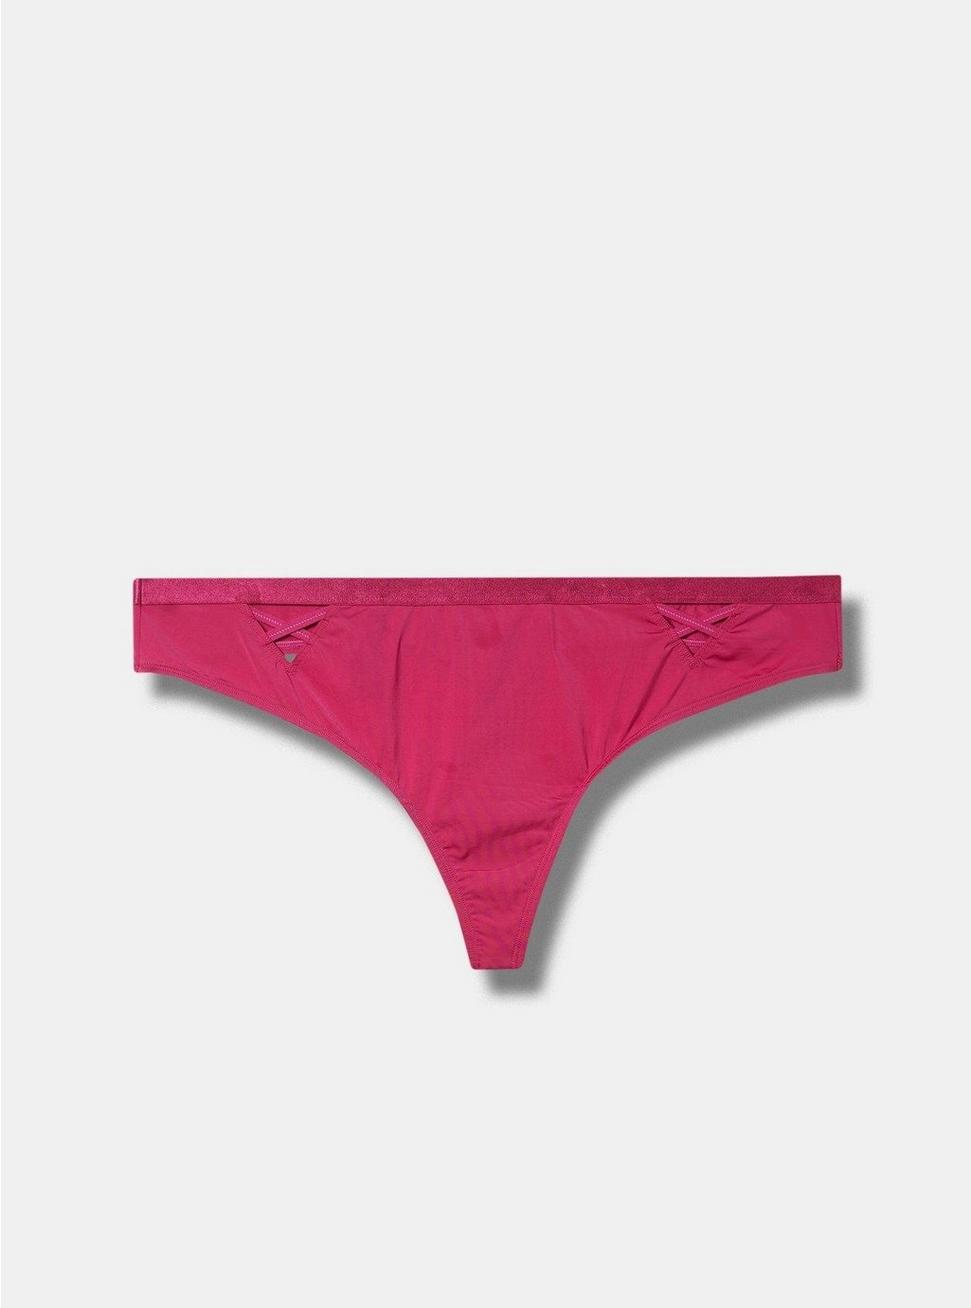 Plus Size Microfiber Lattice Thong Panty, FUCHSIA RED, hi-res